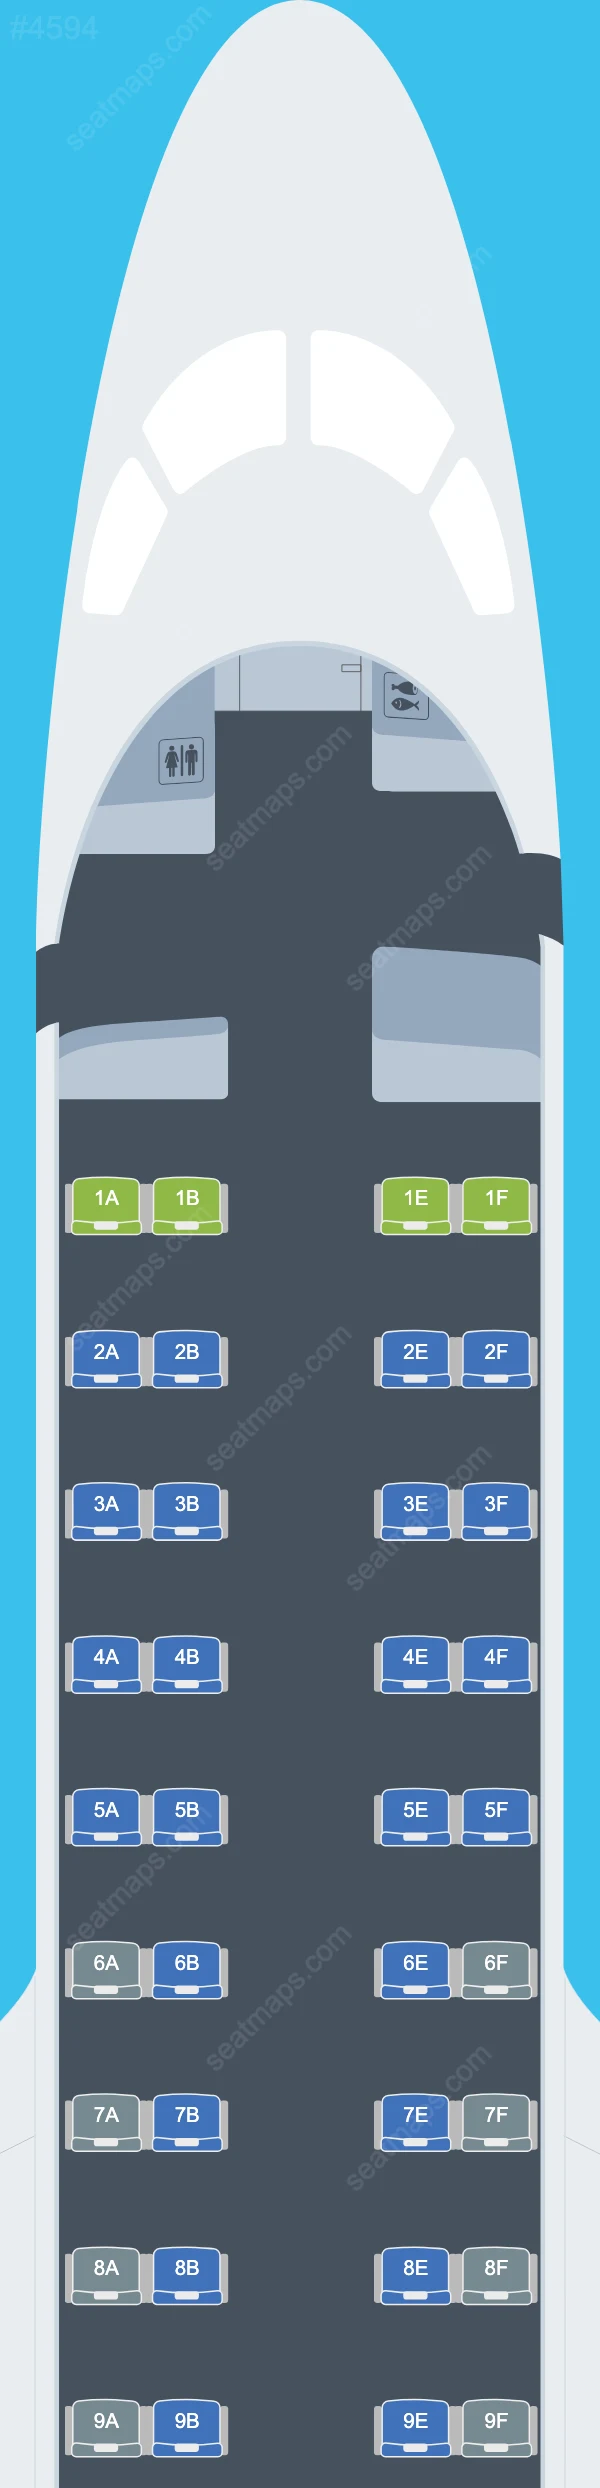 Airnorth Embraer E170 seatmap mobile preview